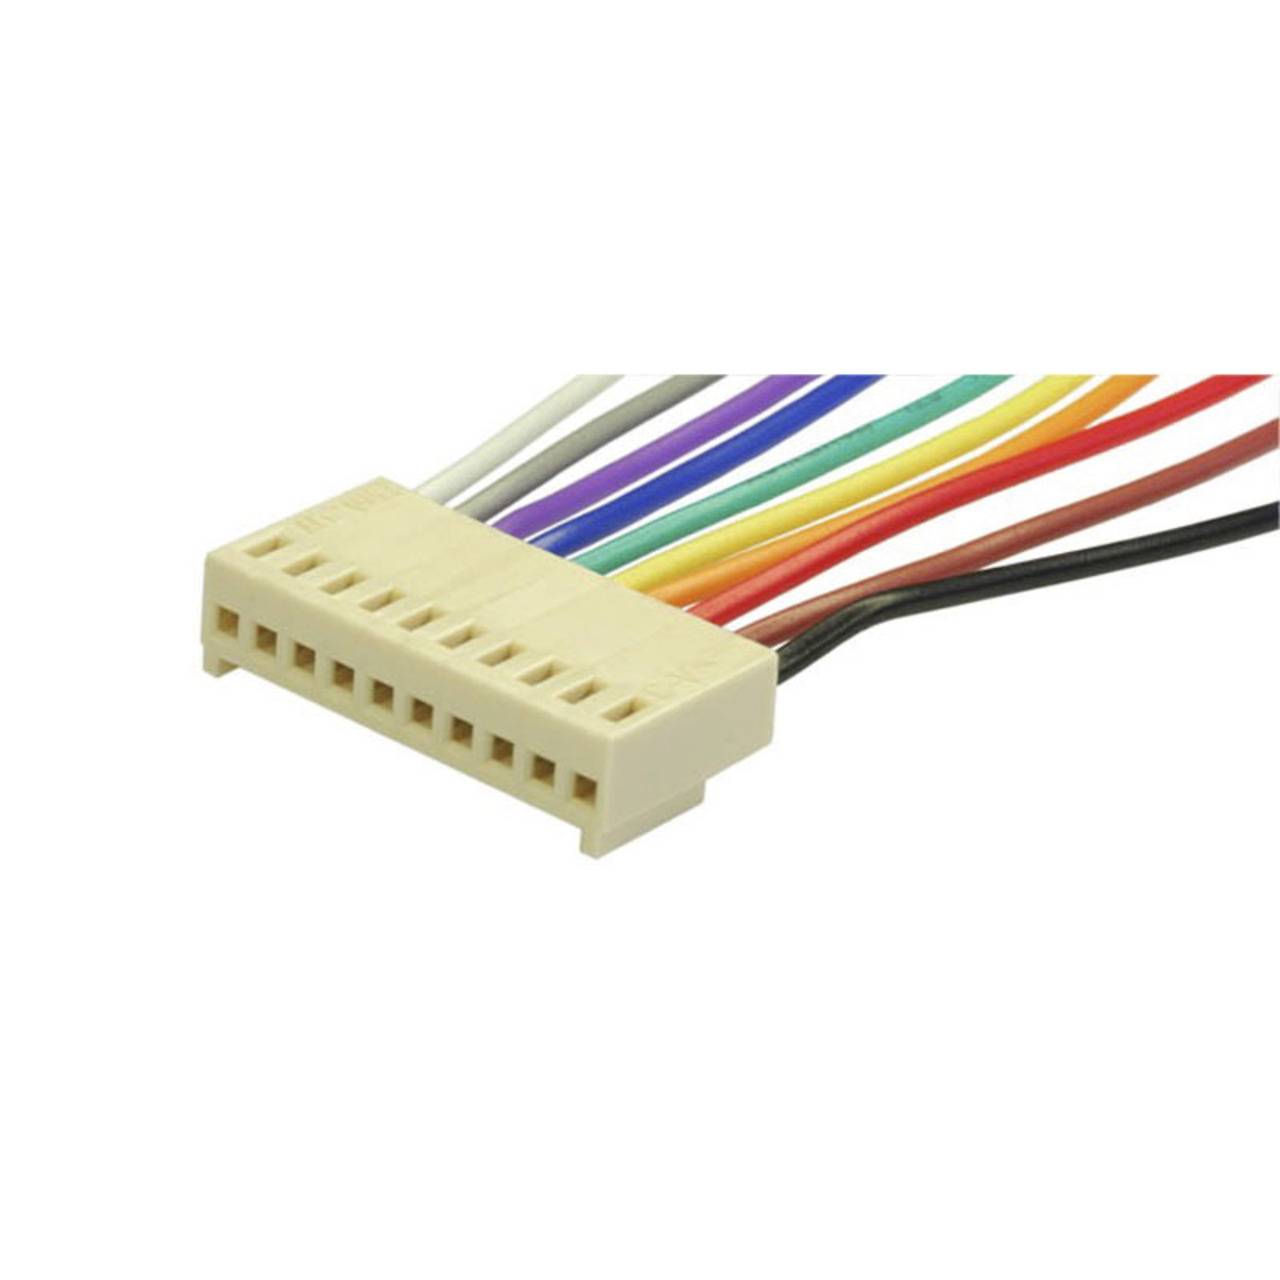 econ connect Steckverbinder PS5- 1x 5-polig- 30 cm- RM 2-54 mm unter Komponenten